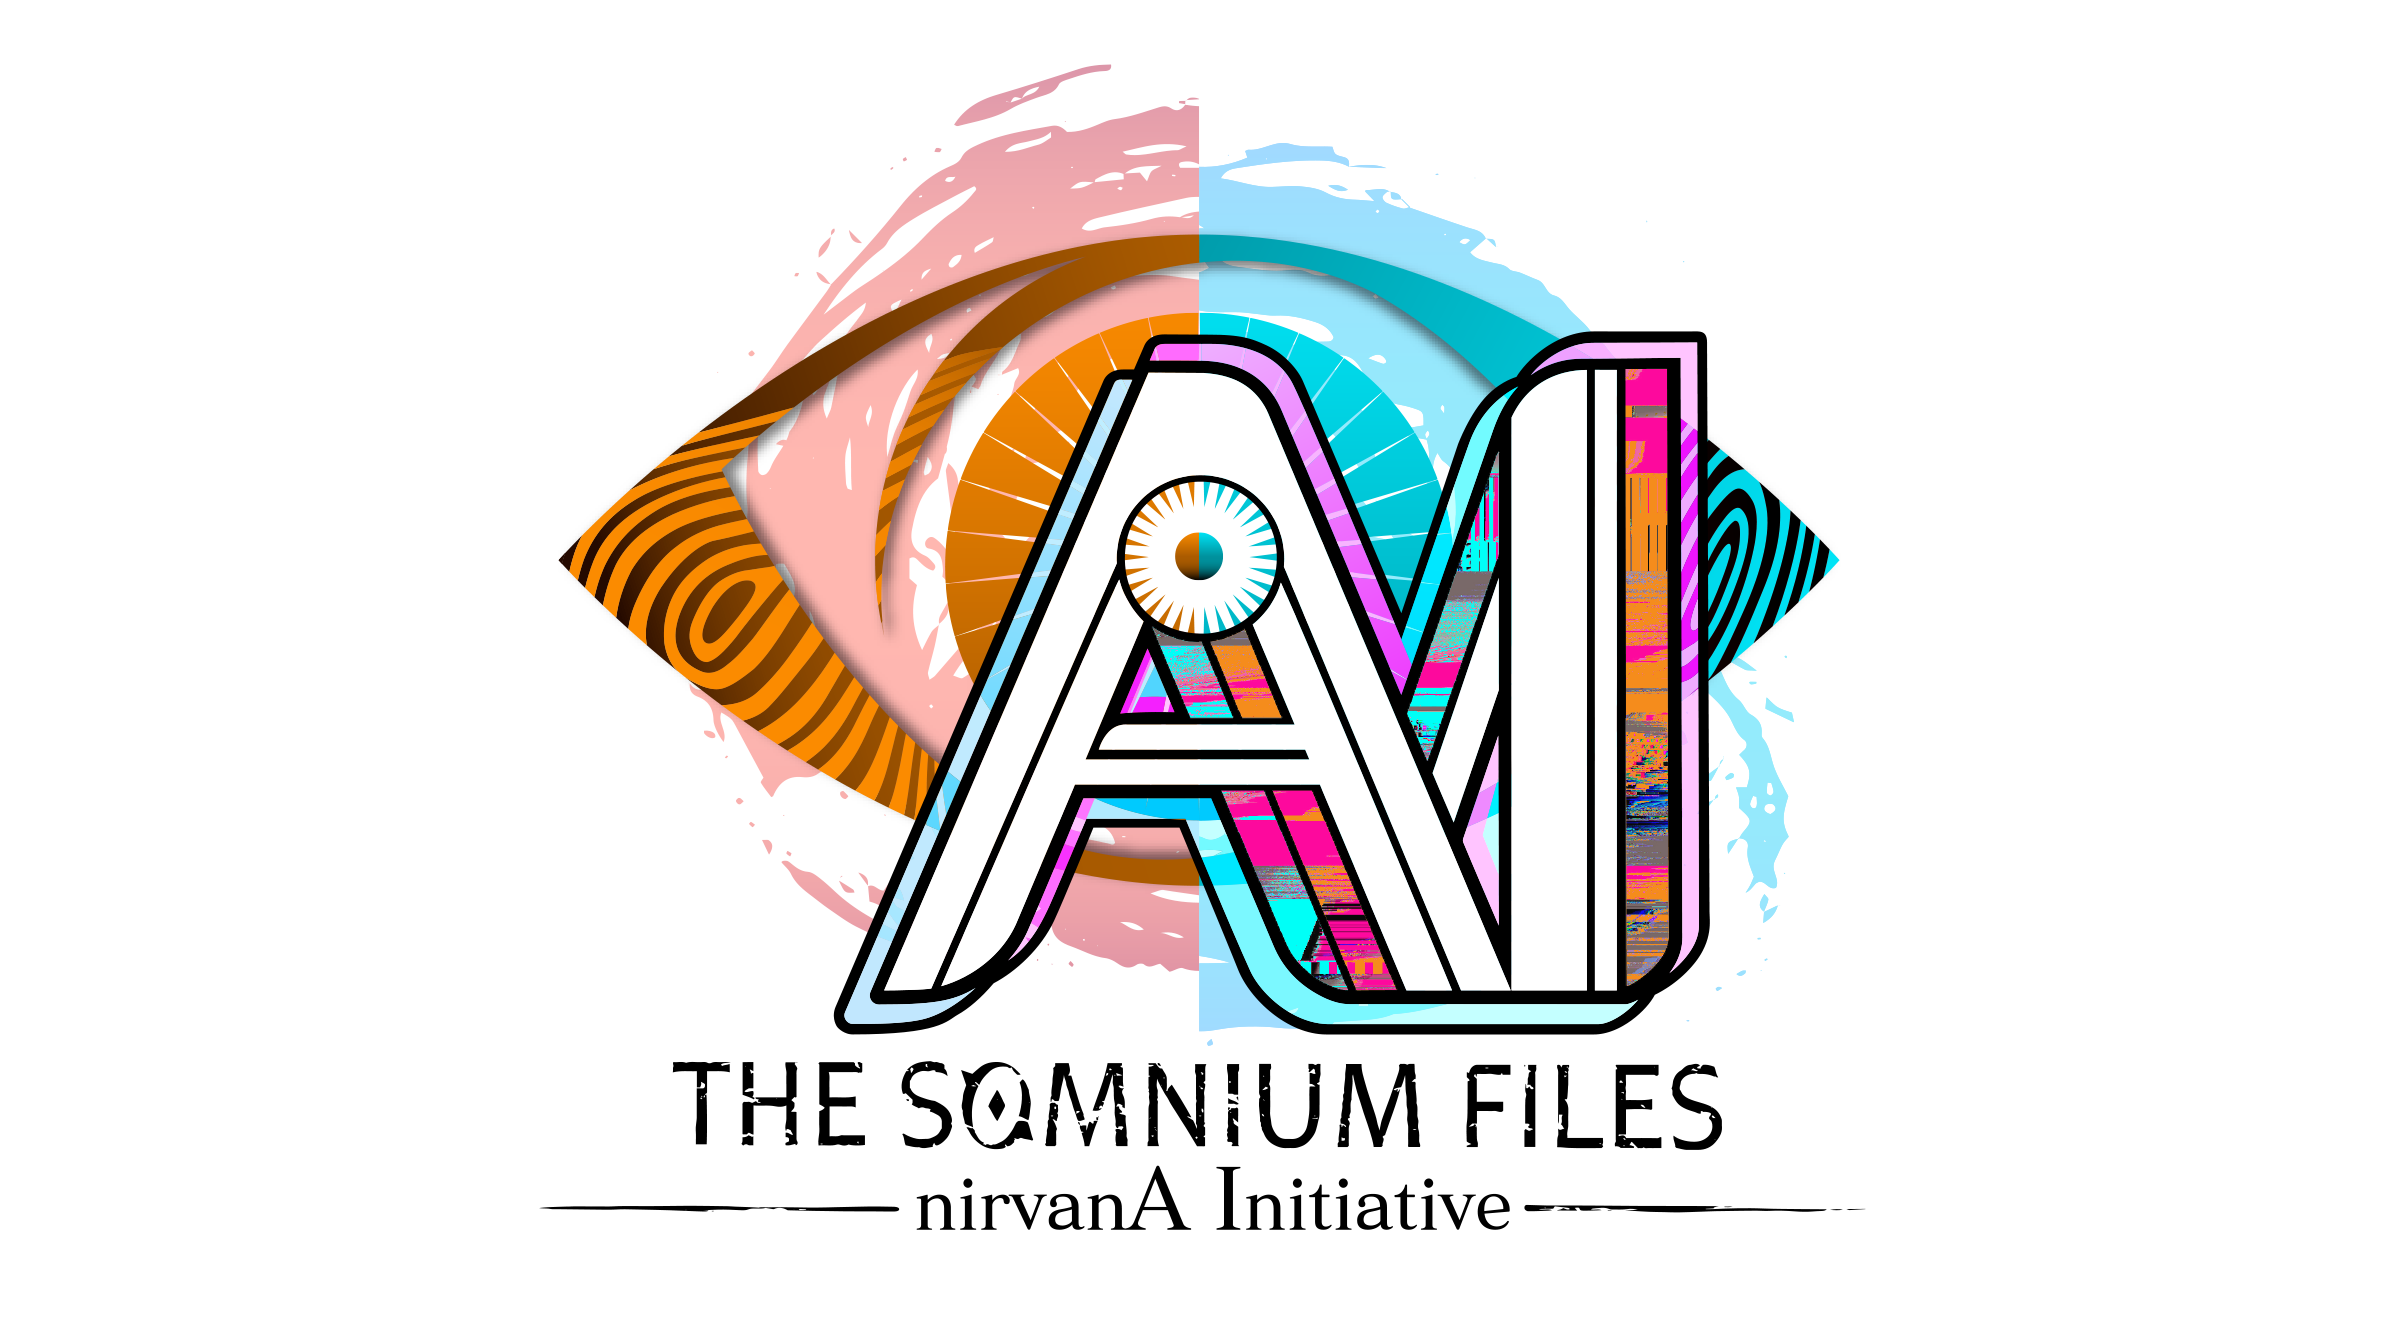 Nirvana ai. Somnium files Nirvana initiative. Ai the Somnium files Nirvana. Ai the Somnium files Nirvana iniative. Ai Nirvana initiative.